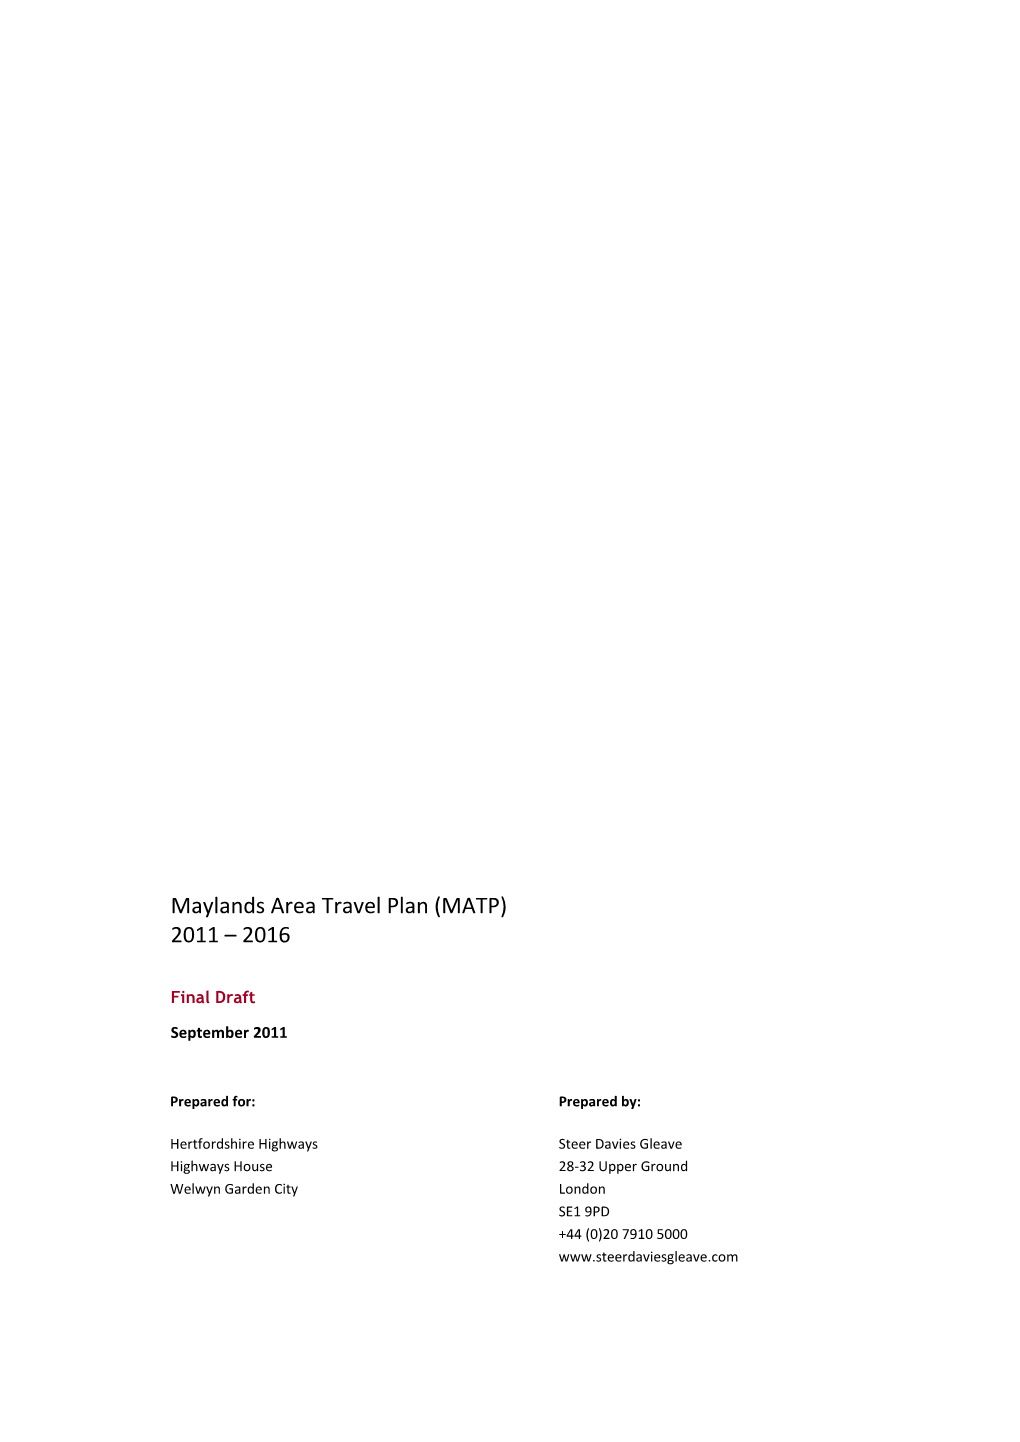 Maylands Area Travel Plan (MATP) 2011 – 2016